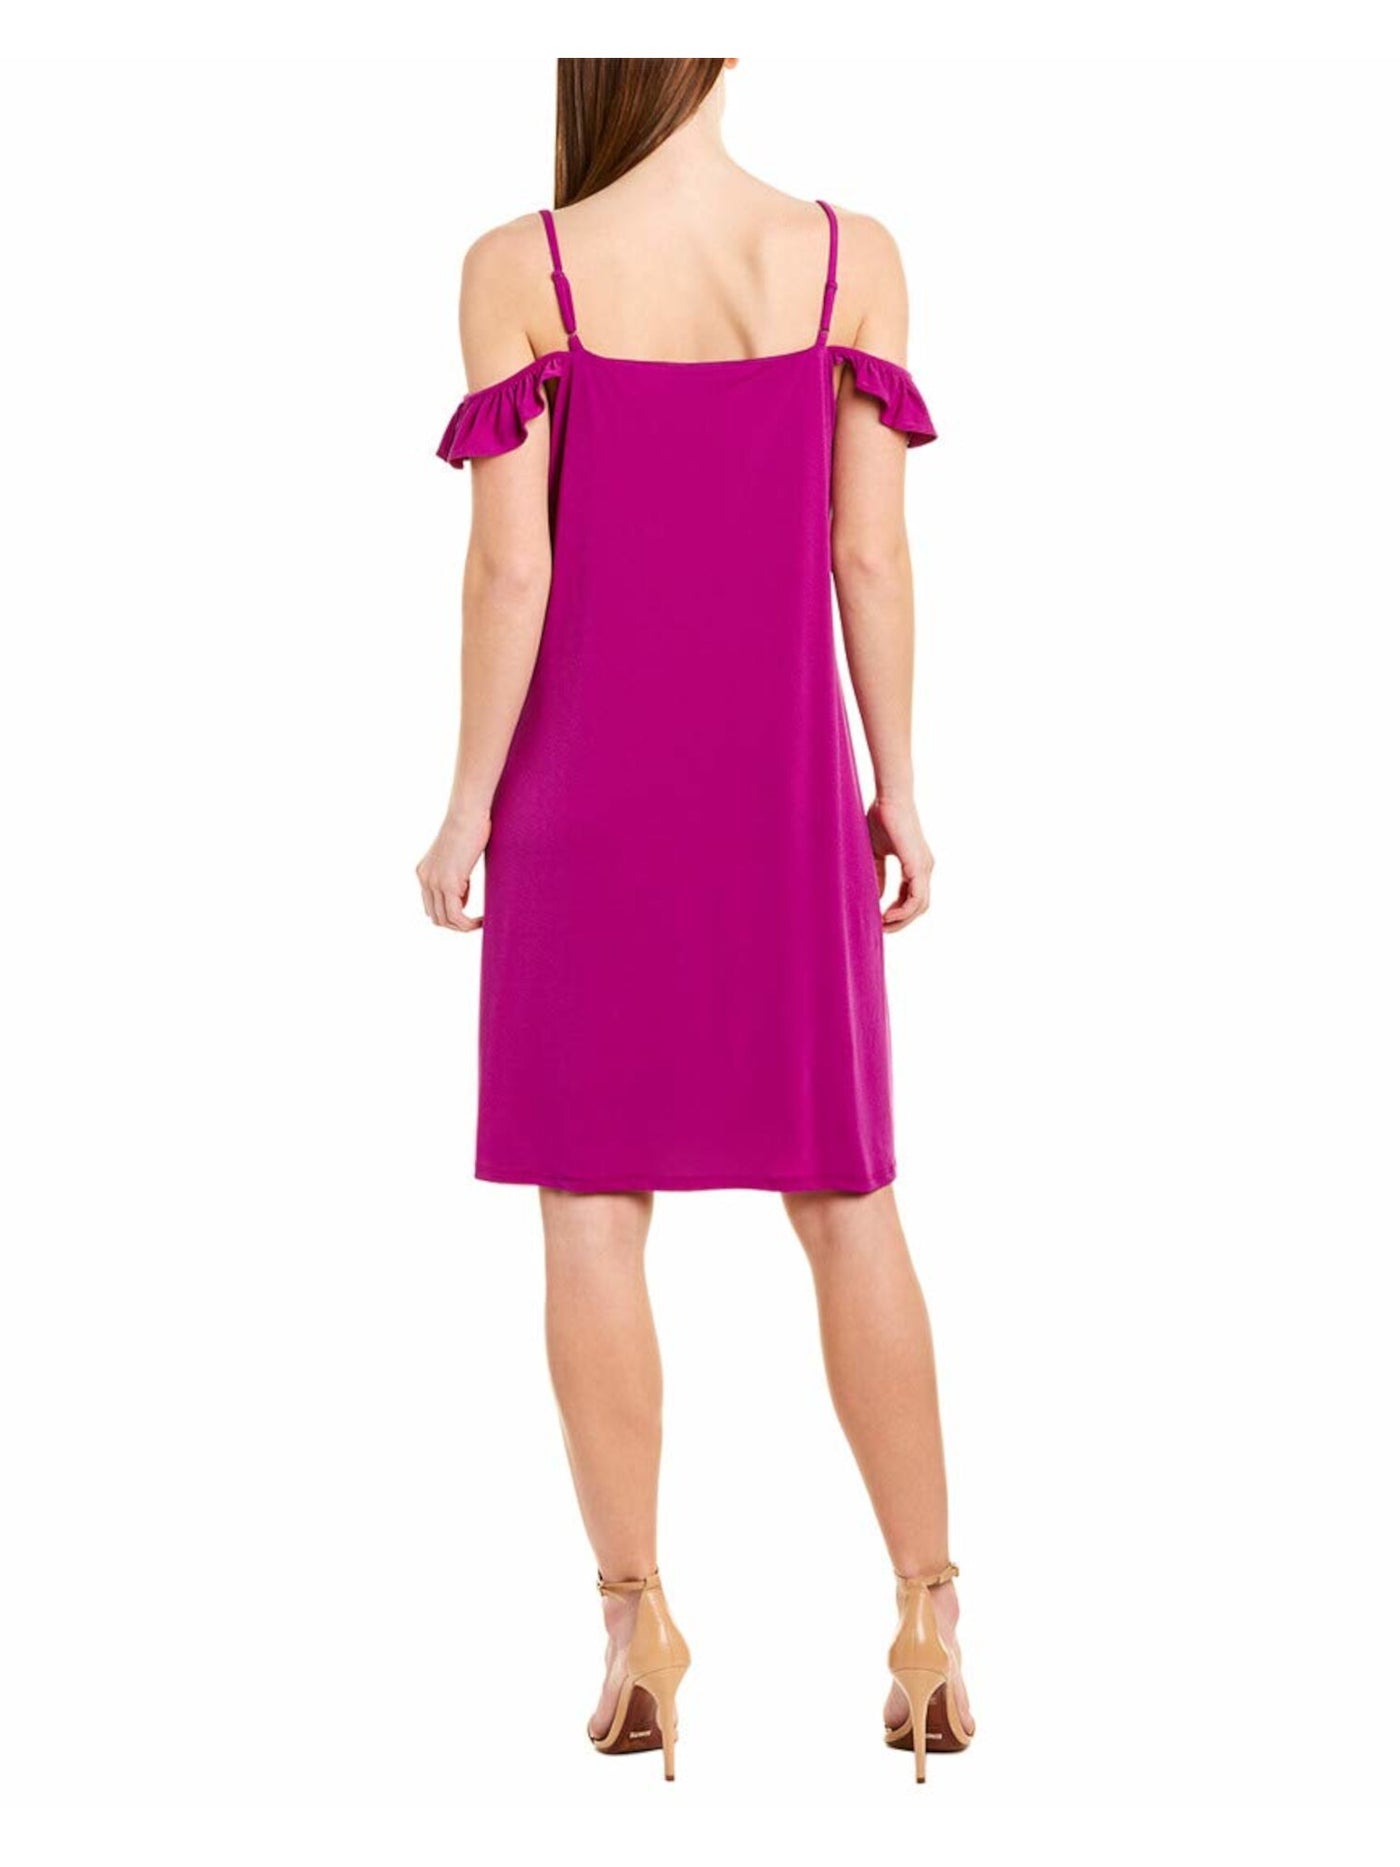 CECE Womens Purple Spaghetti Strap Off Shoulder Knee Length Shift Dress XS